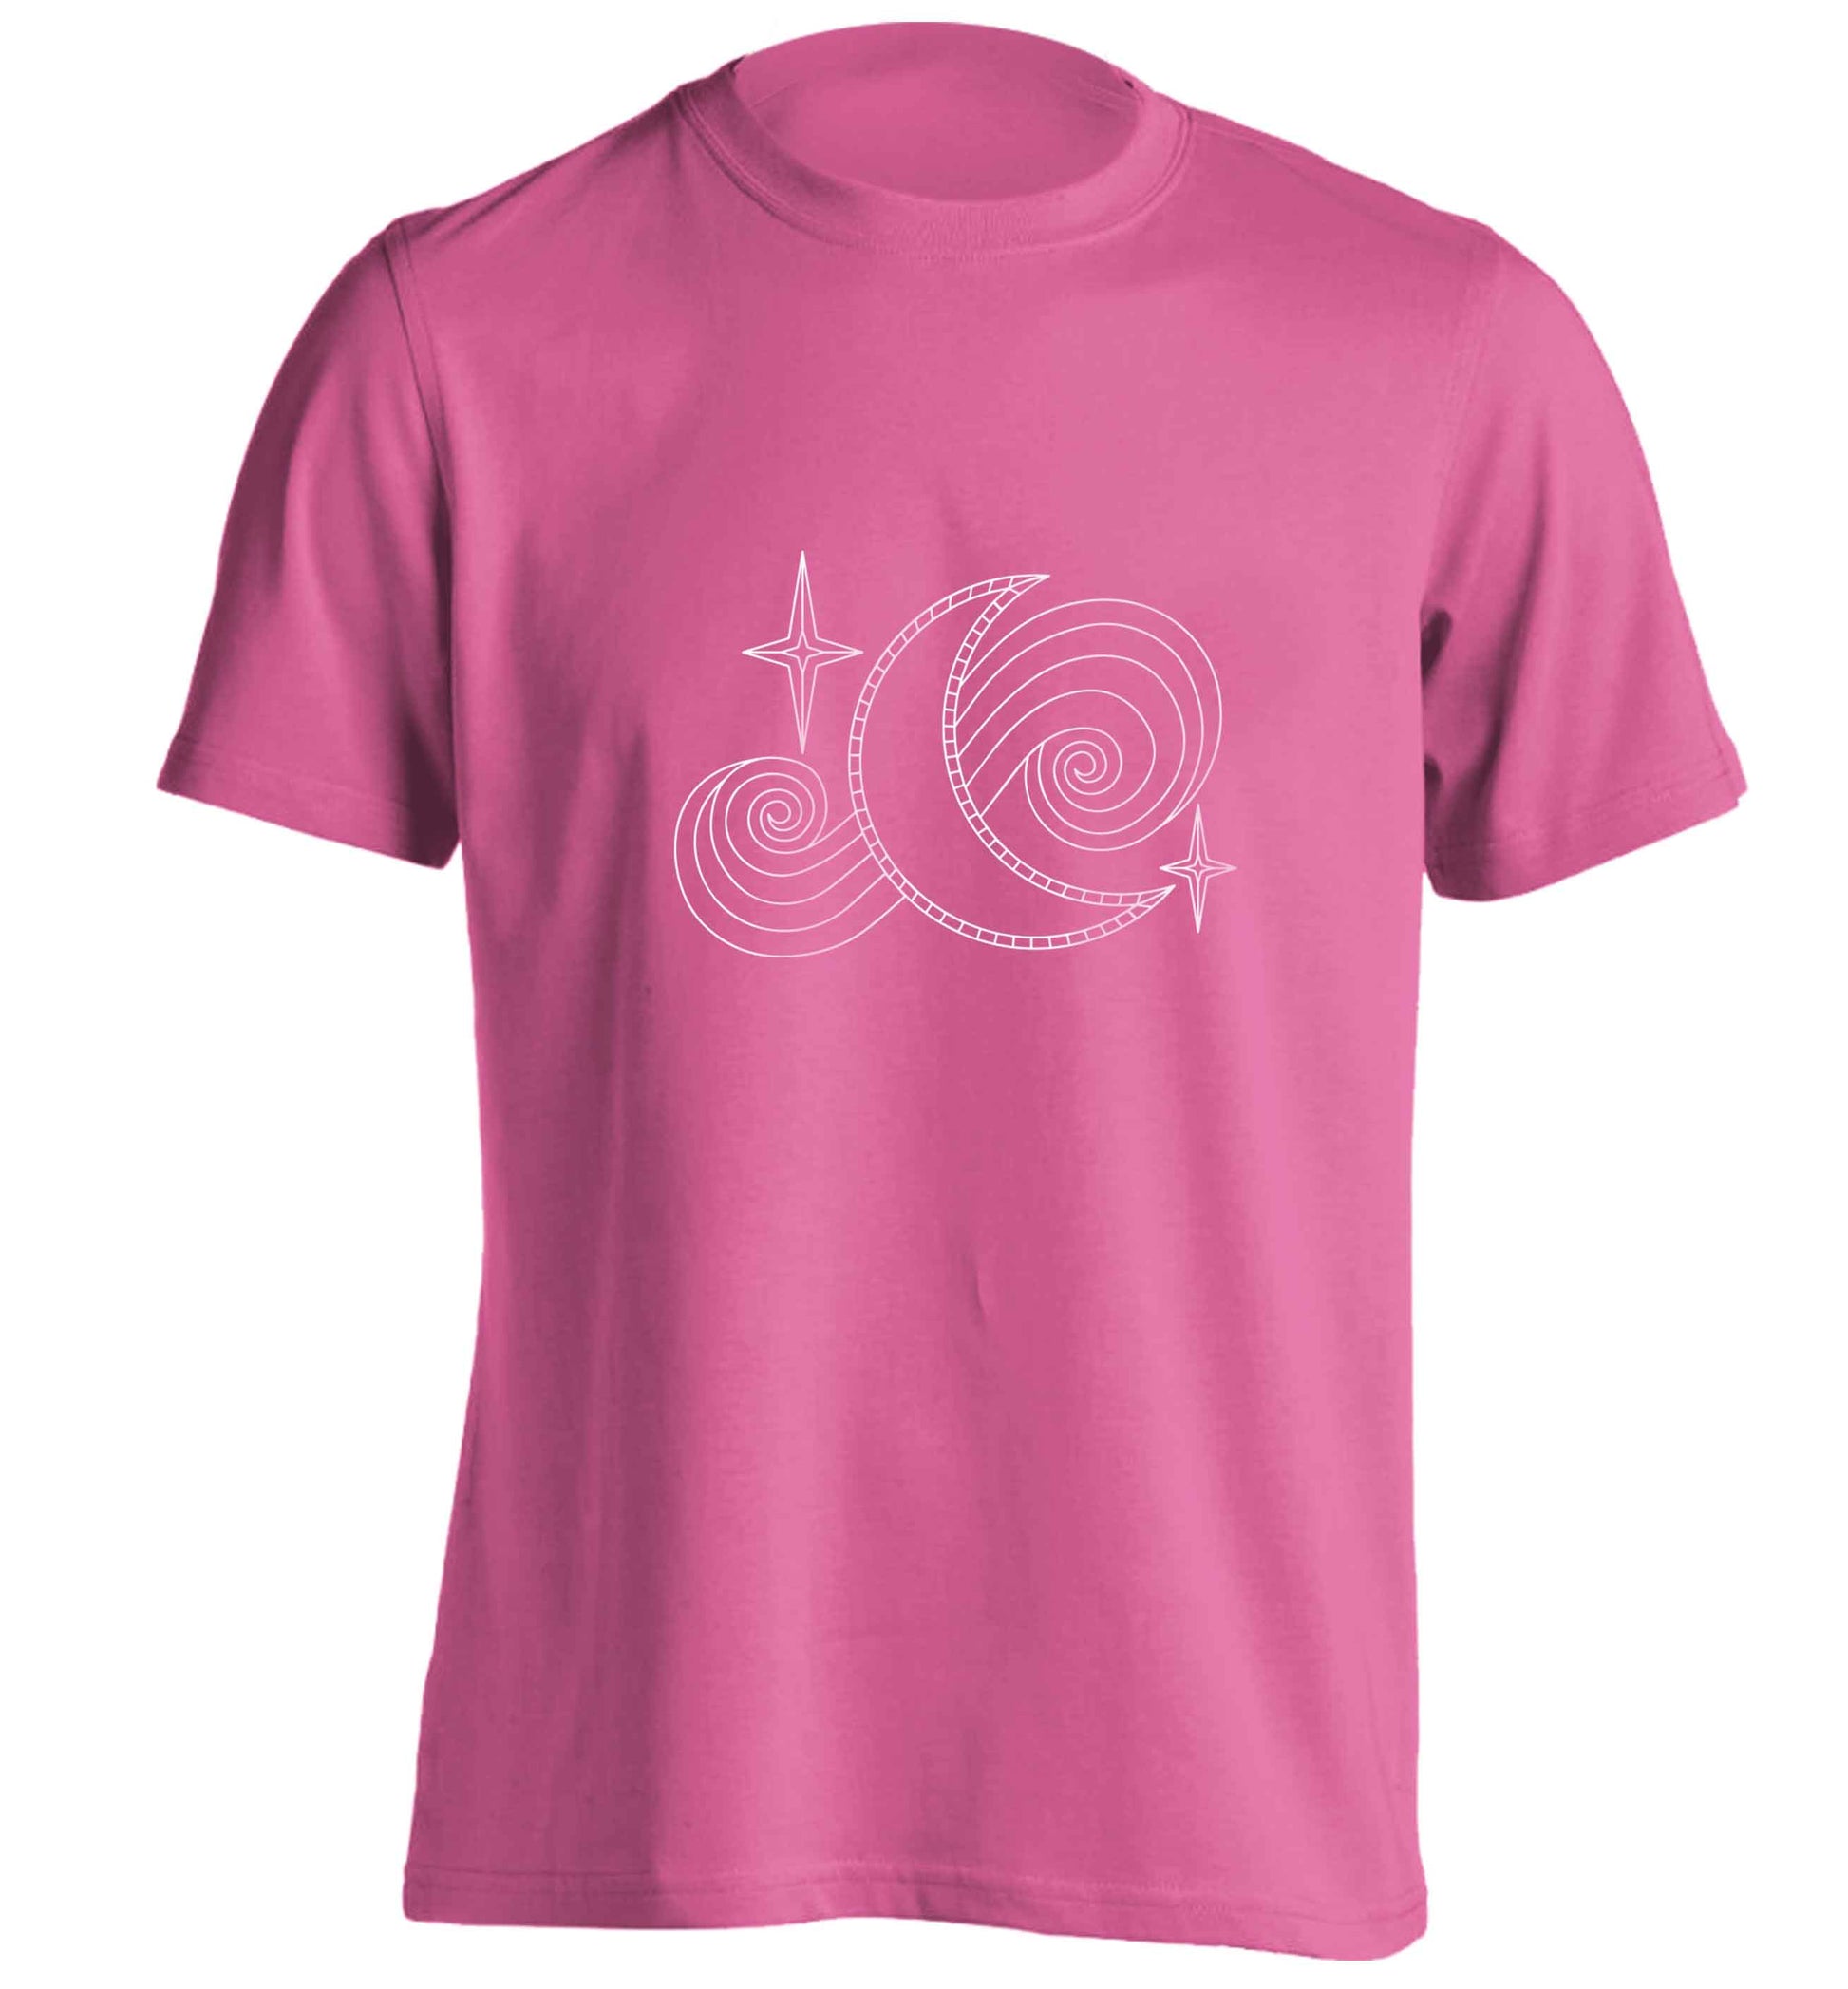 Moon and stars illustration adults unisex pink Tshirt 2XL